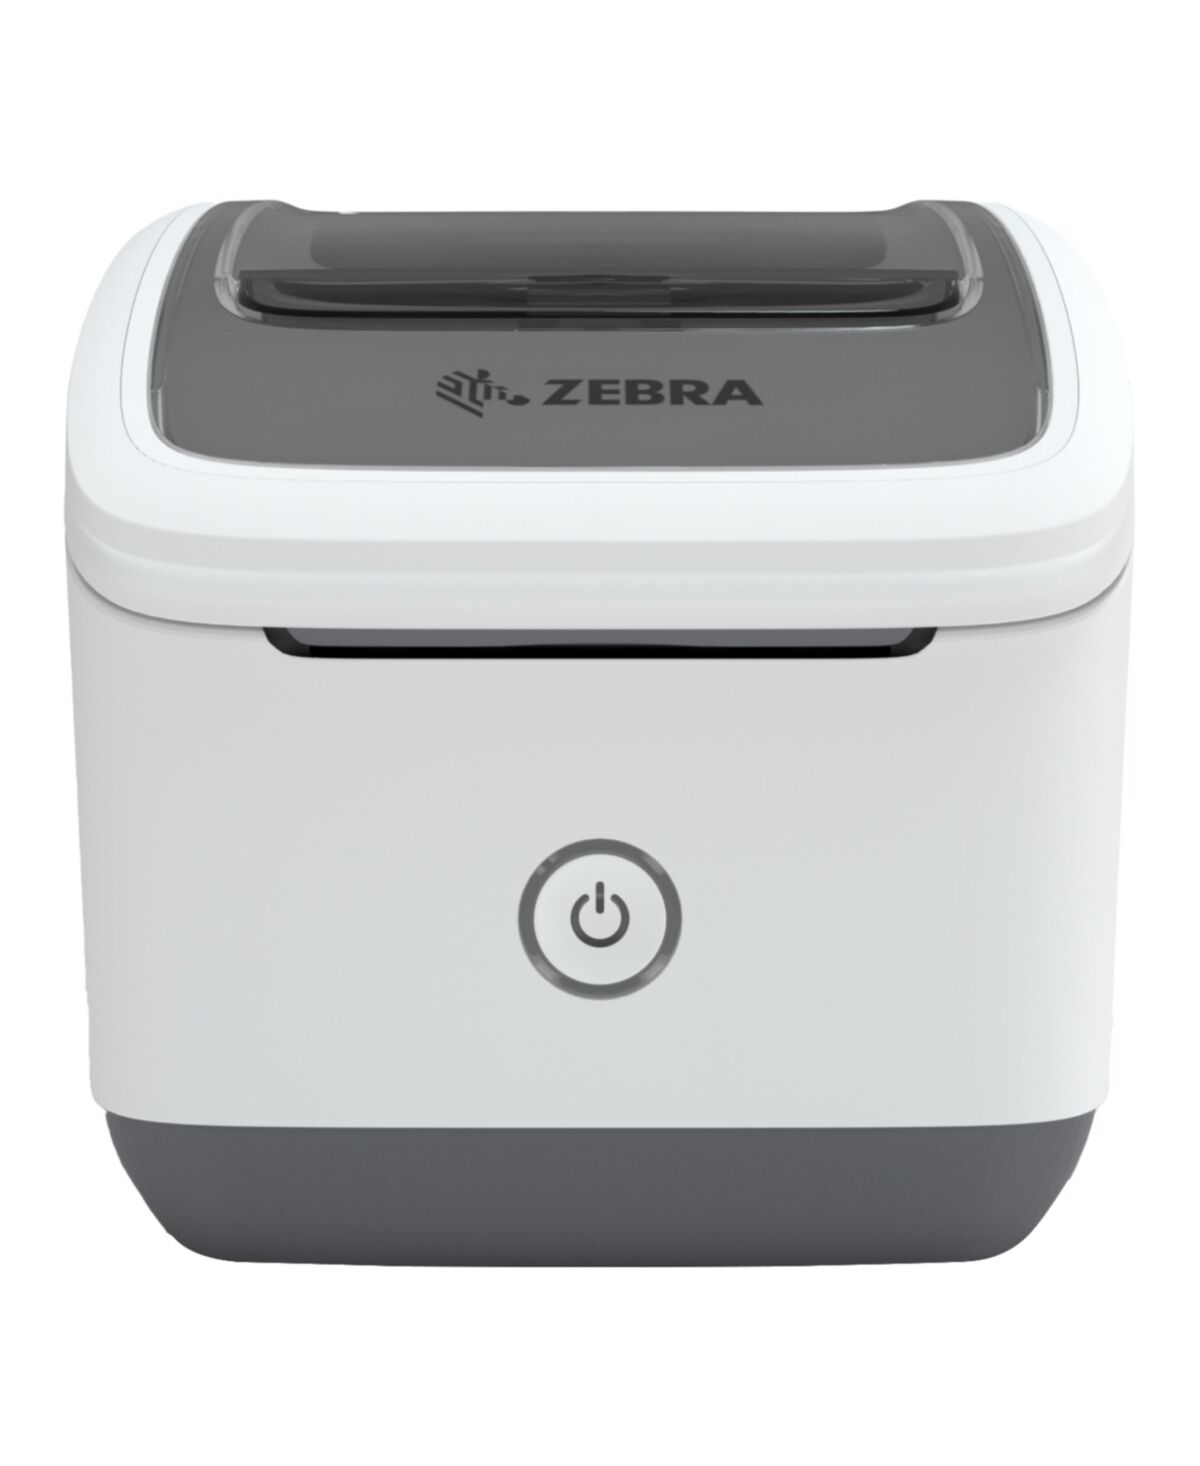 Zebra Zsb Series Thermal Label Printer - Label Printer for Zsb Label Cartridges (Files, Multipurpose, Barcode, Address, Jewelry +) Wireless Printer Co